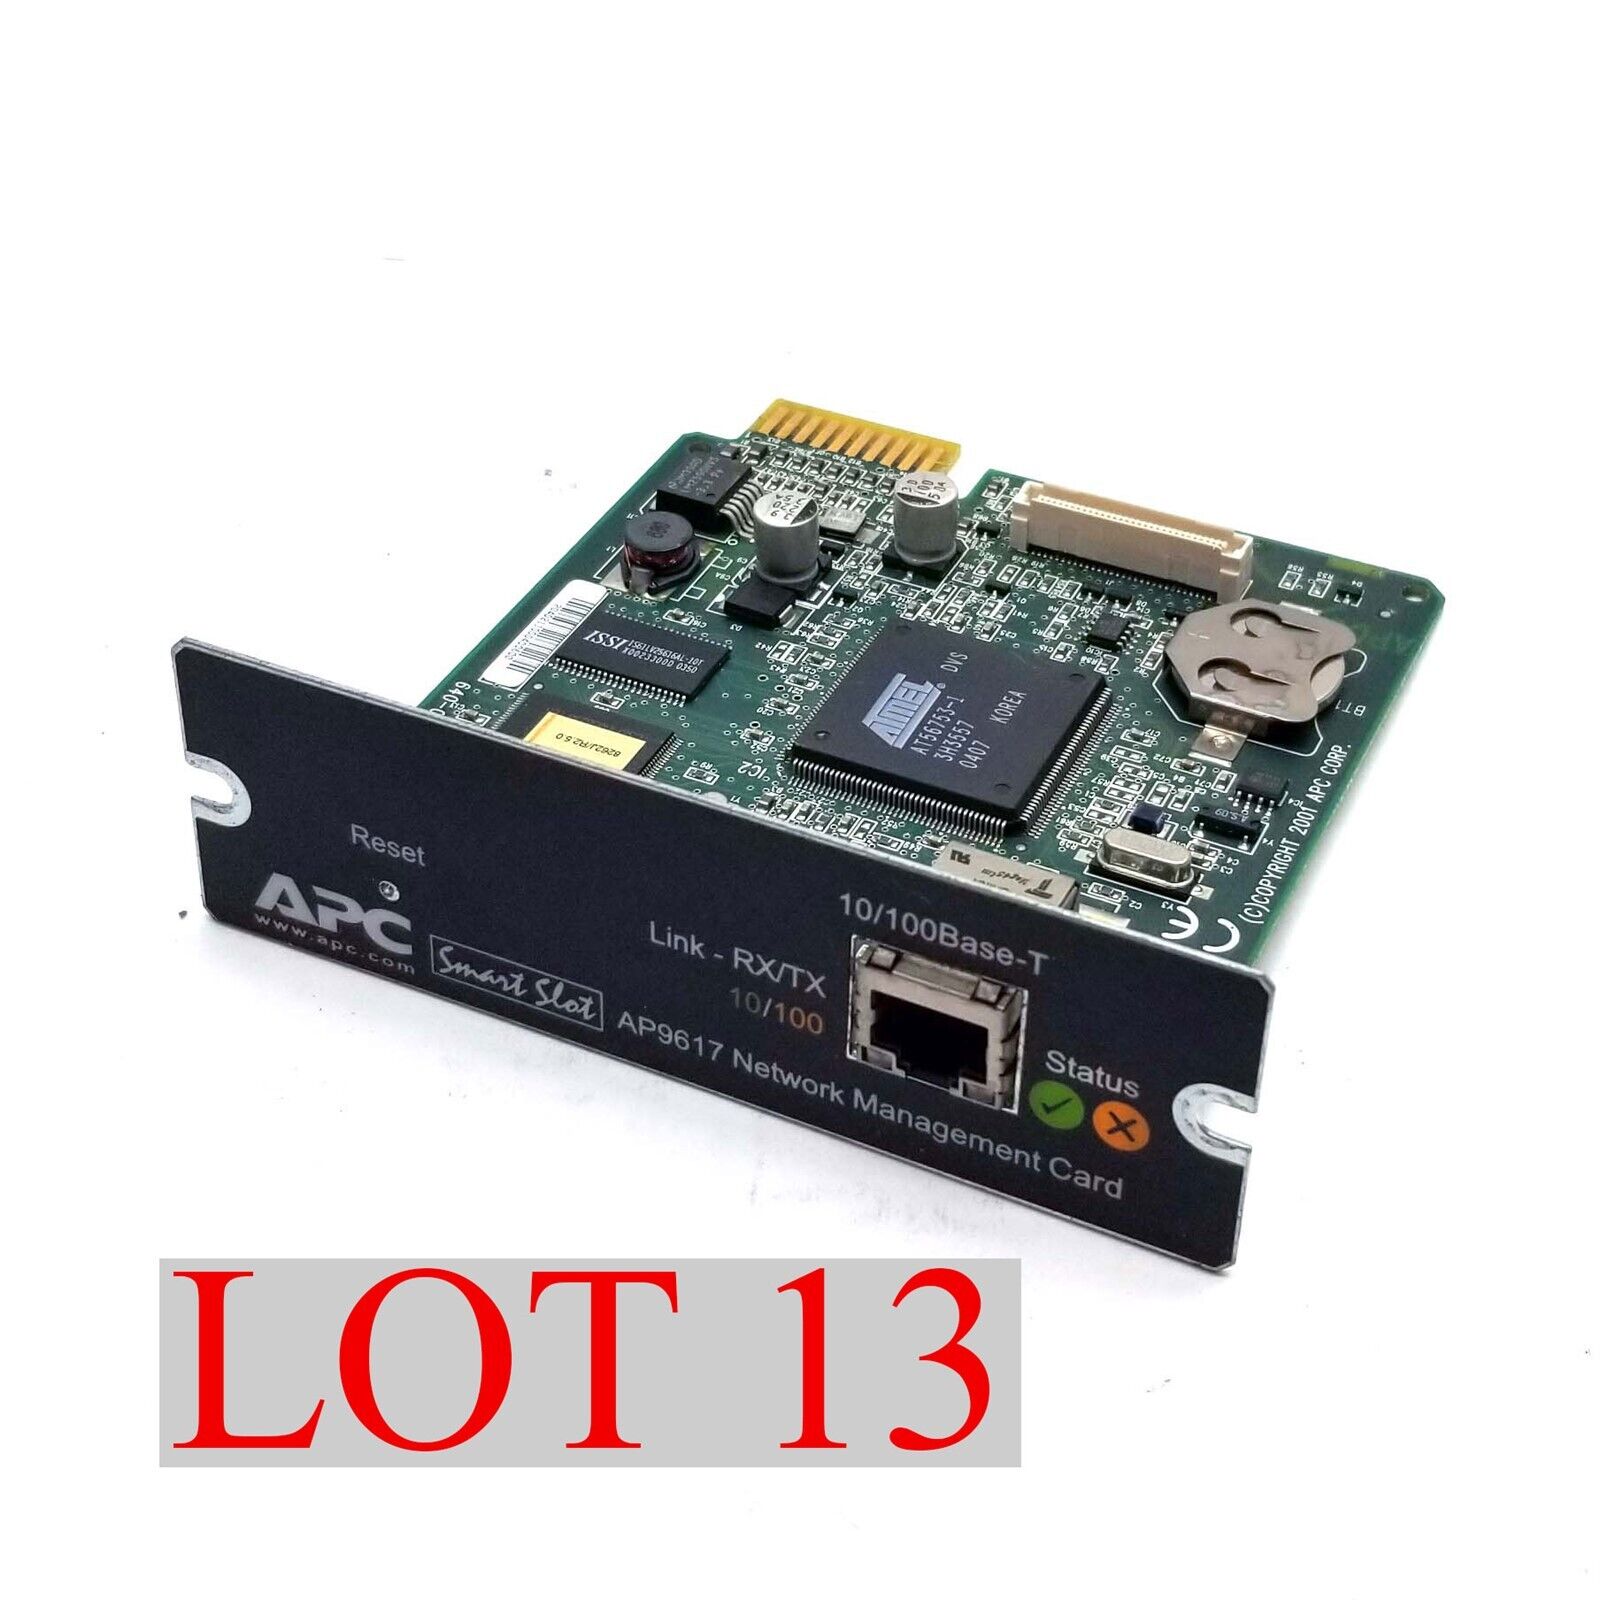 APC Network Management Card AP9617 UPS Smart Slot 10/100 Backup Battery Lot 13